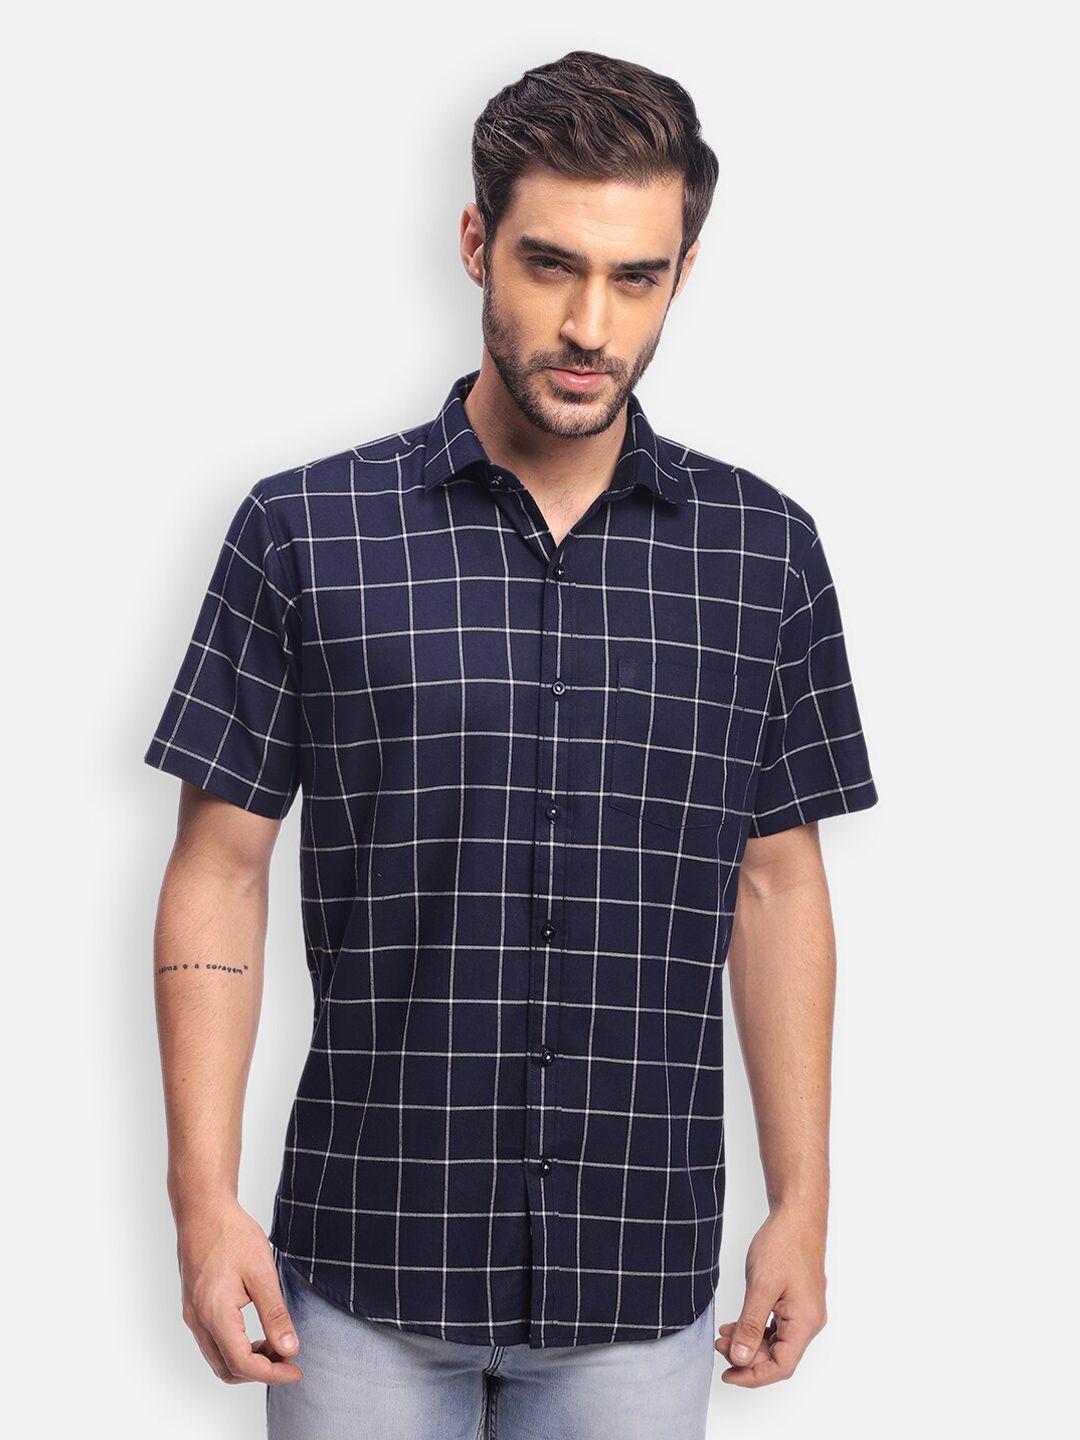 zeal-standard-windowpane-checks-checked-pure-cotton-casual-shirt